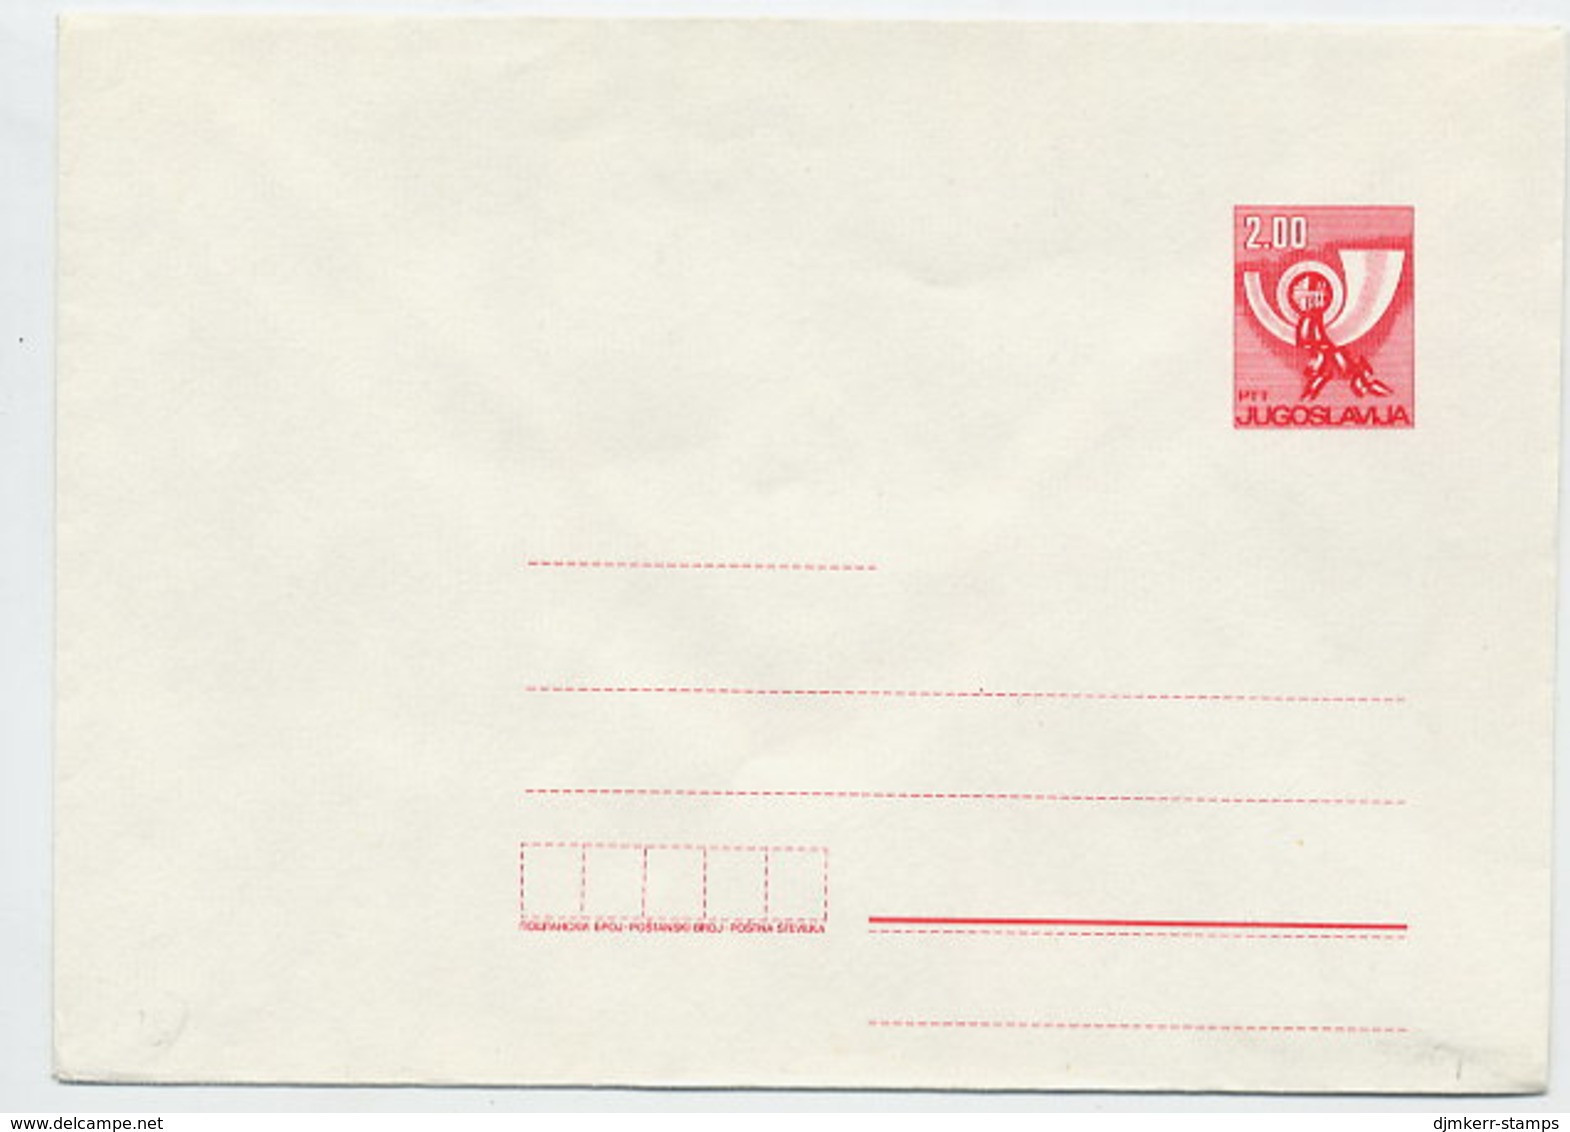 YUGOSLAVIA 1978 Posthorn 2.00 D. Envelope, Unused. Michel U71 - Postal Stationery